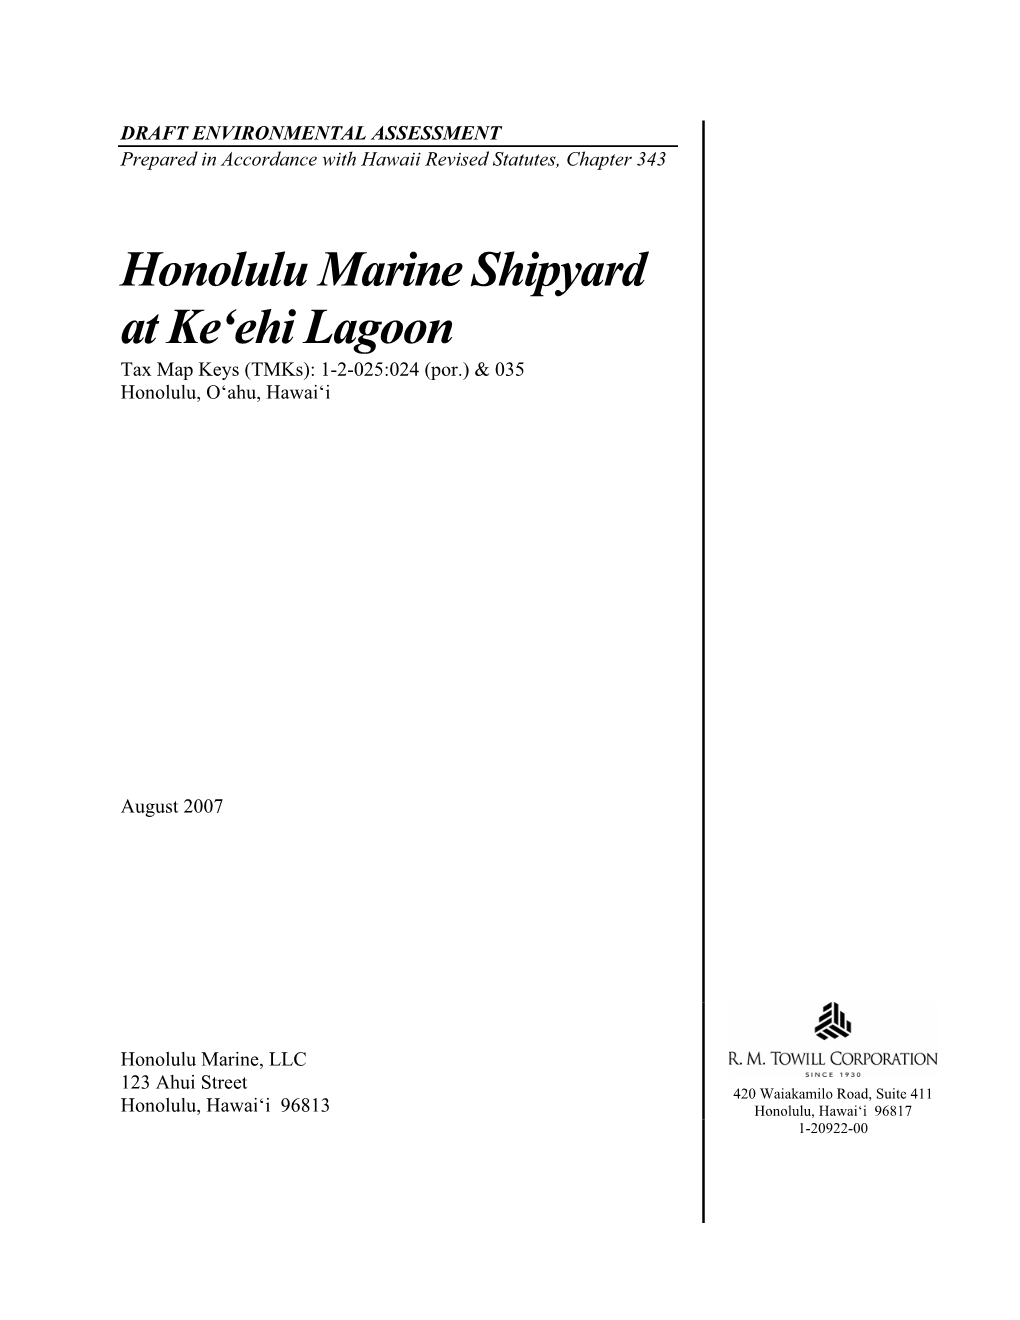 Honolulu Marine Shipyard at Ke'ehi Lagoon